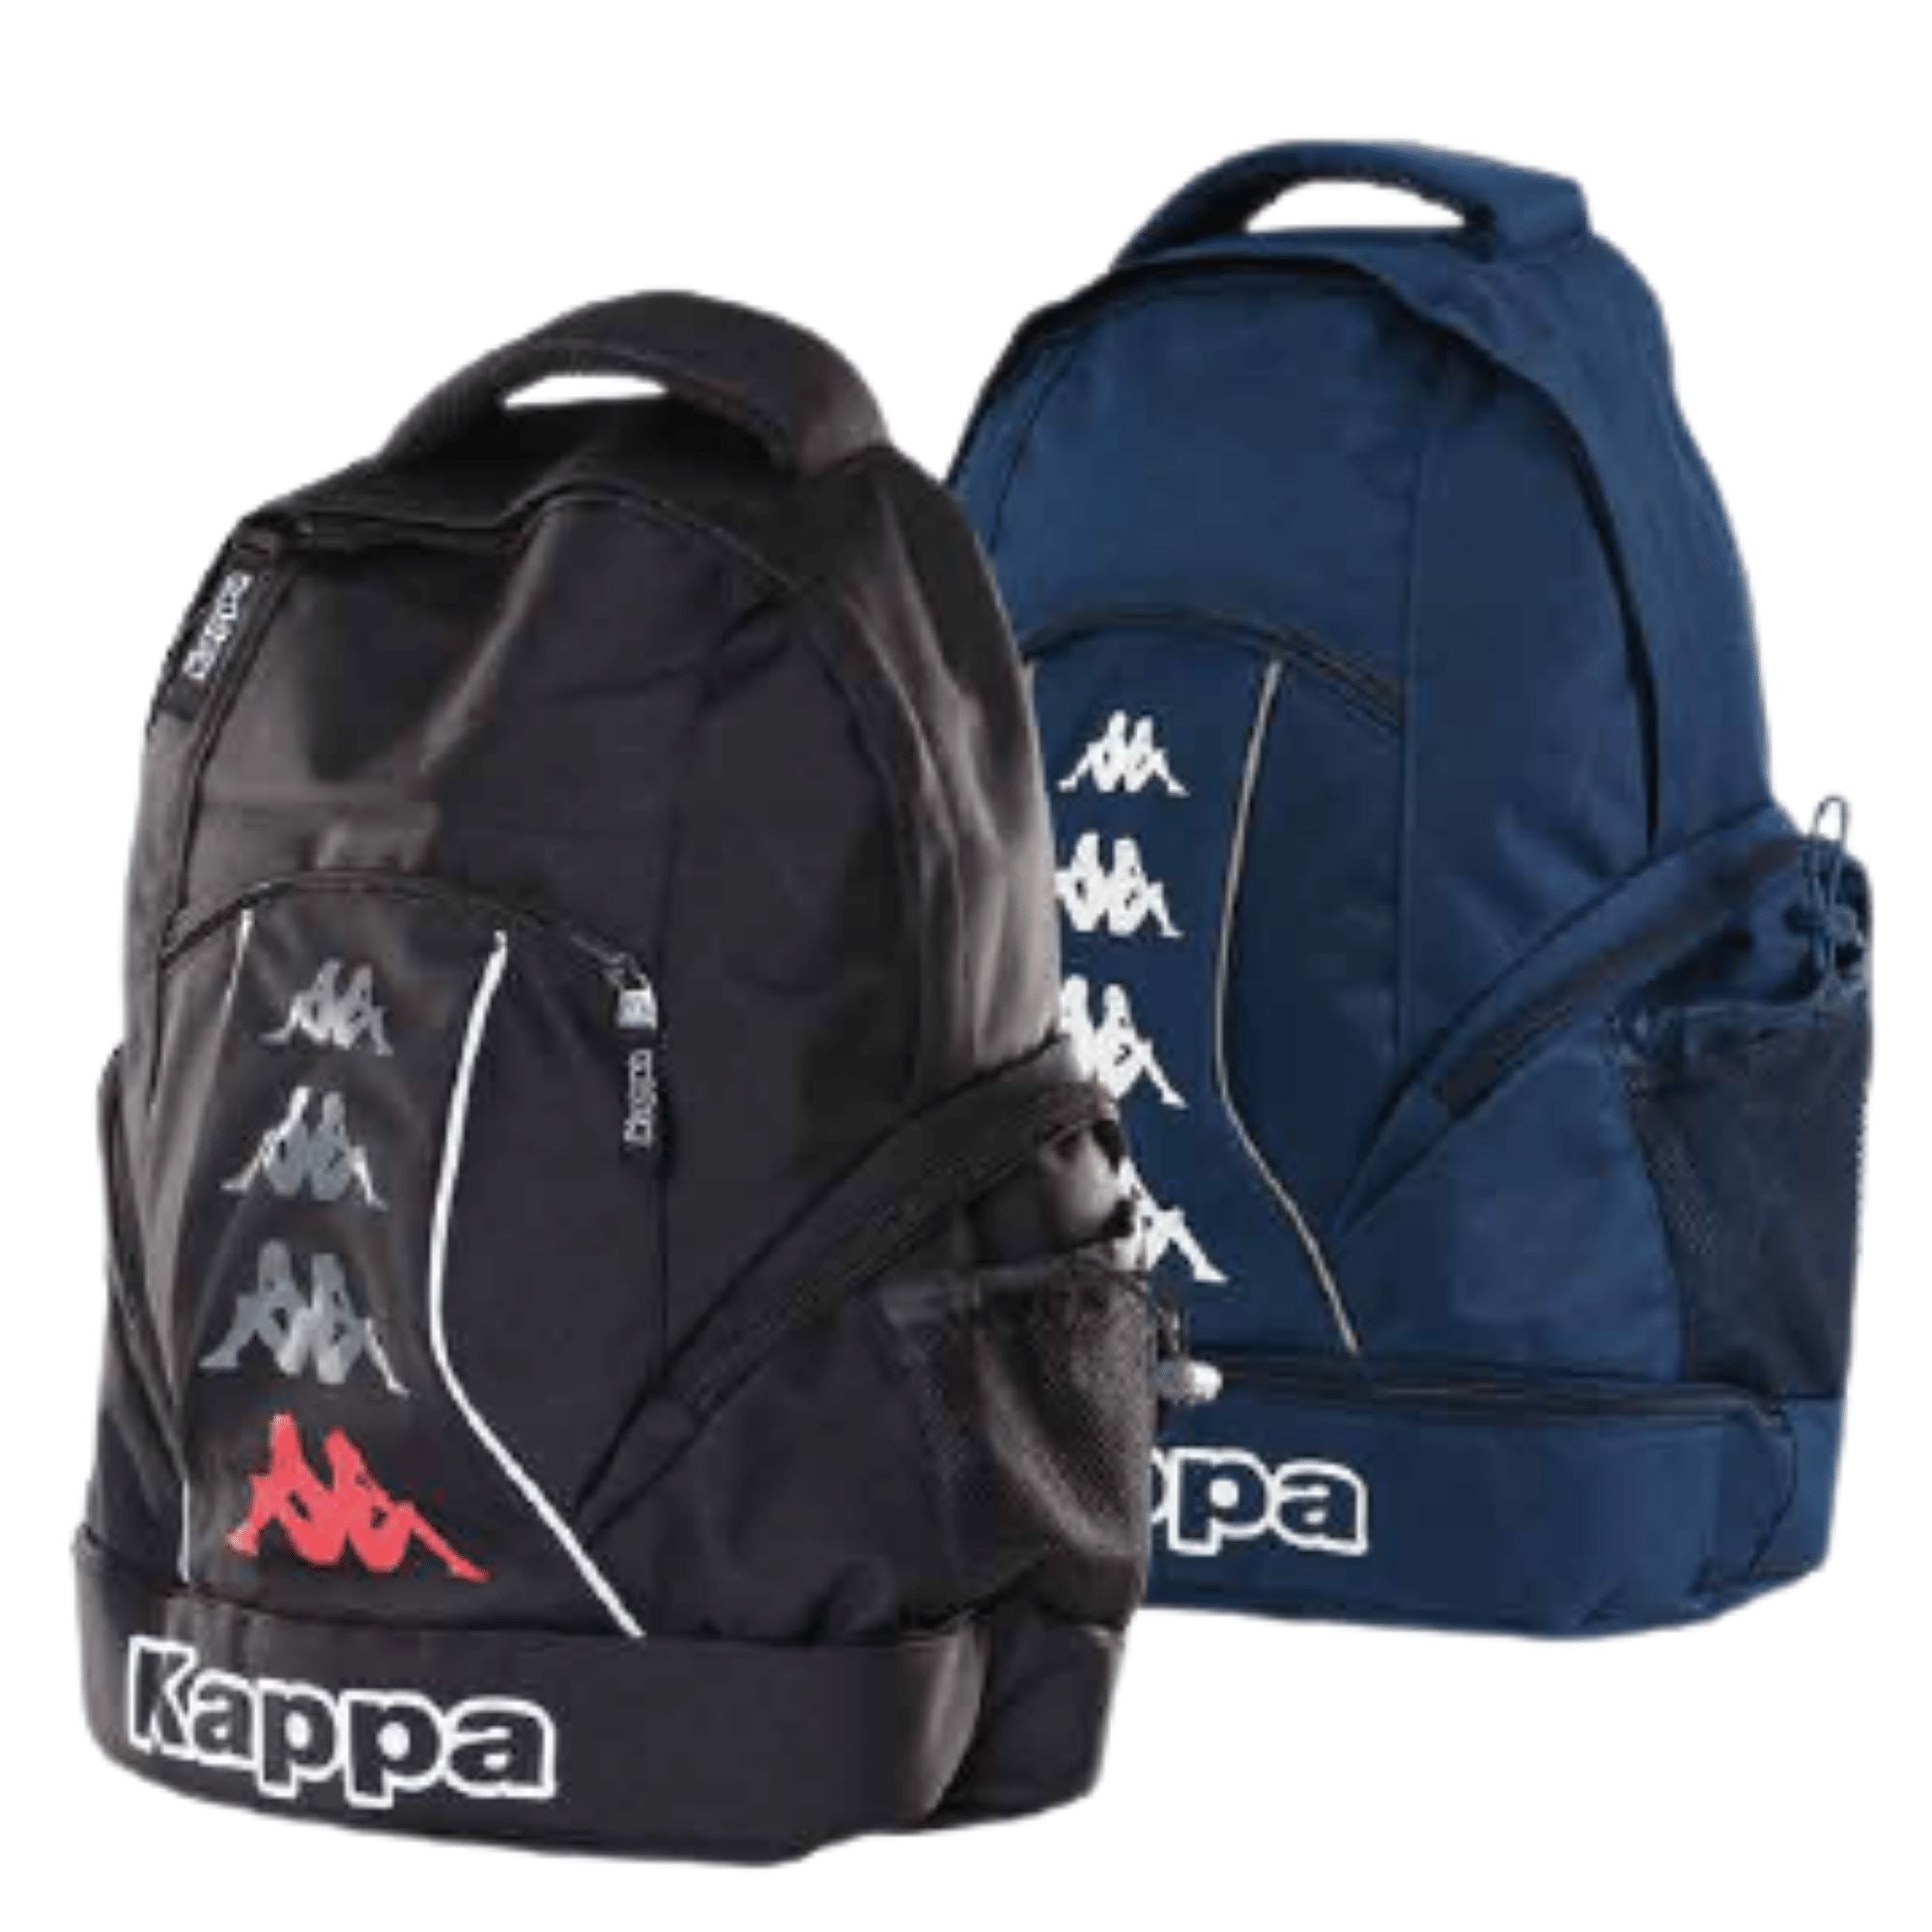 Kappa Velia Backpack - Premier Teamwear